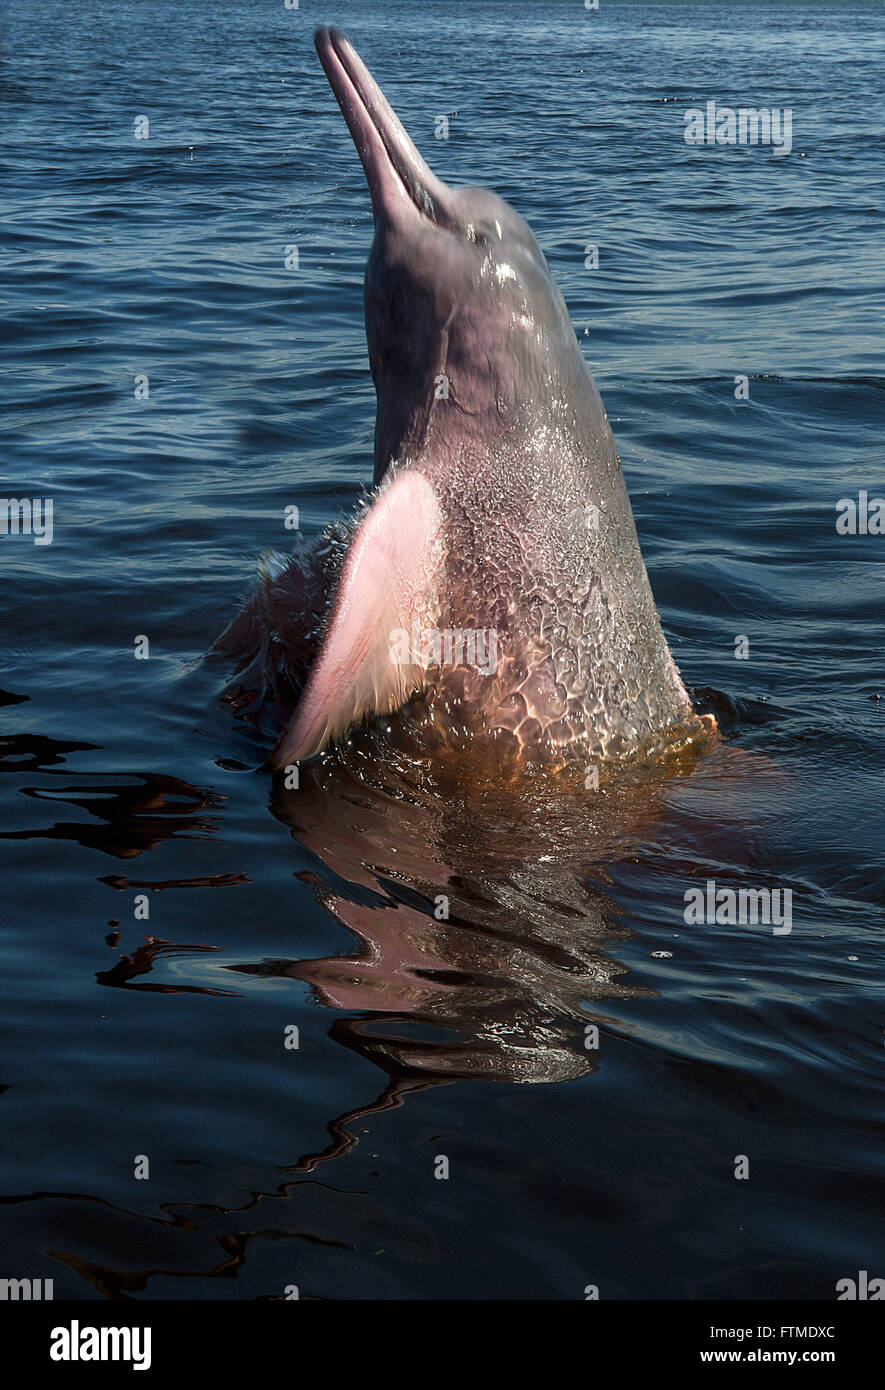 Rosaroter delfin -Fotos und -Bildmaterial in hoher Auflösung – Alamy